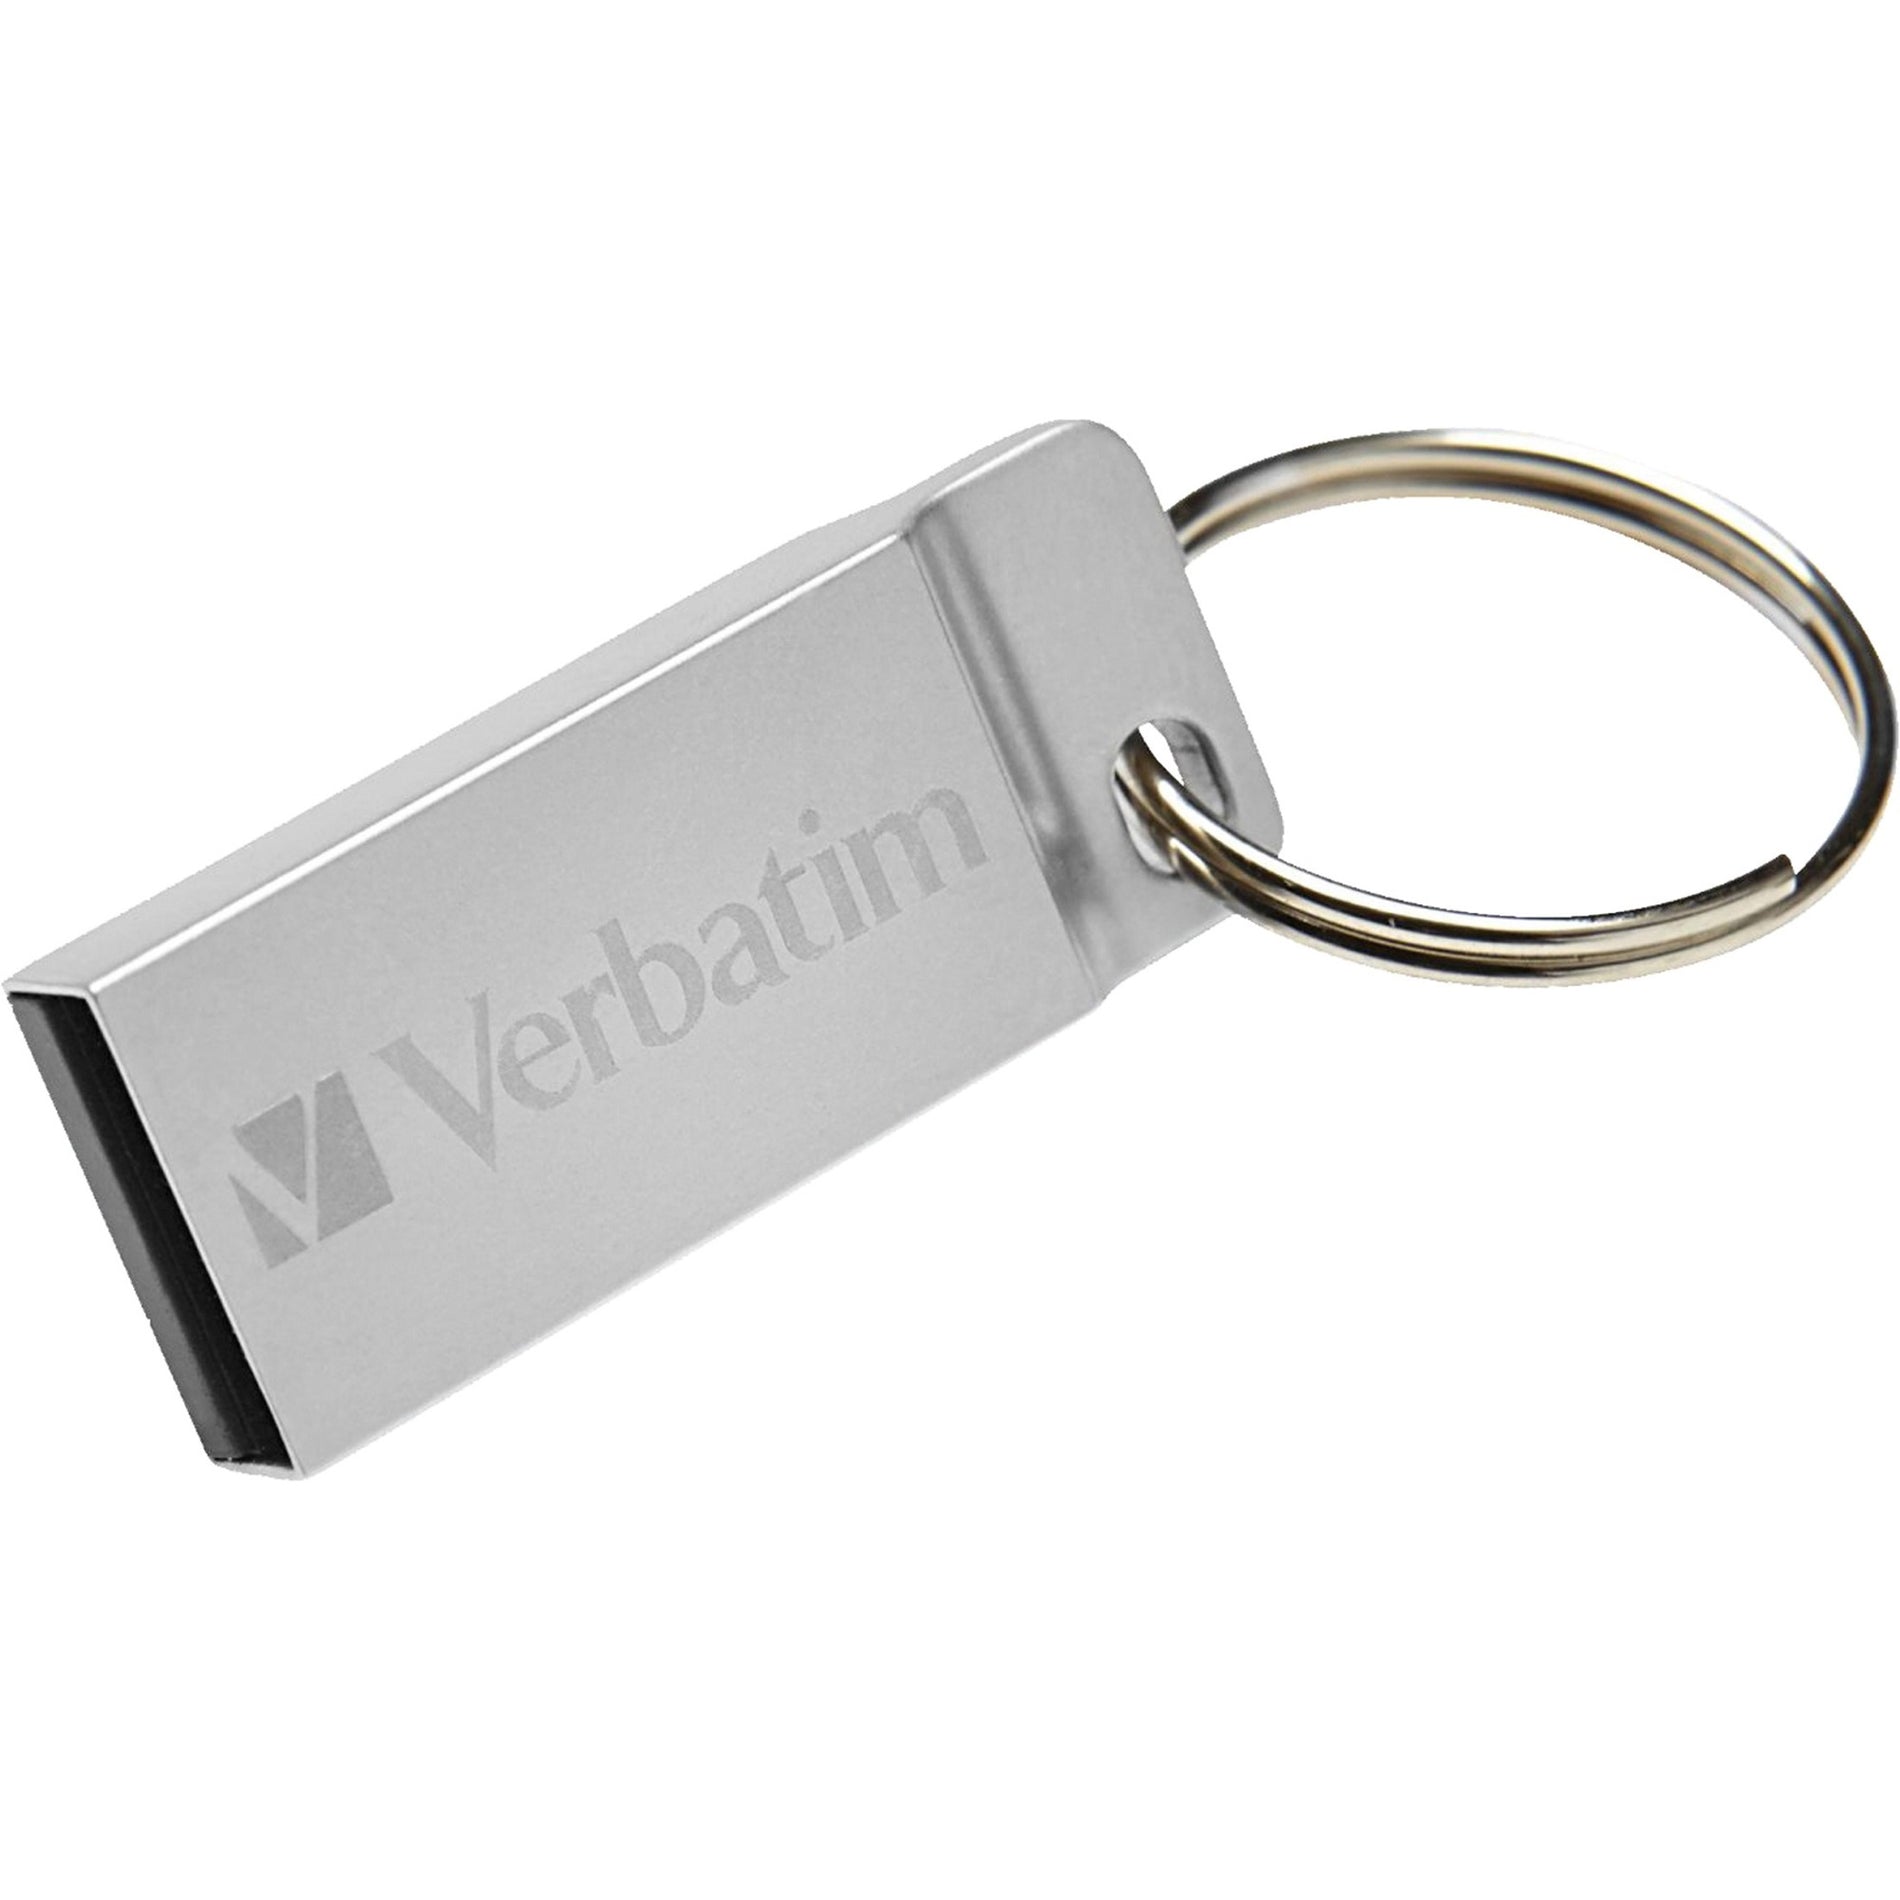 Verbatim 98749 Metal Executive USB Flash Drive - Silver, 32GB Water Resistant